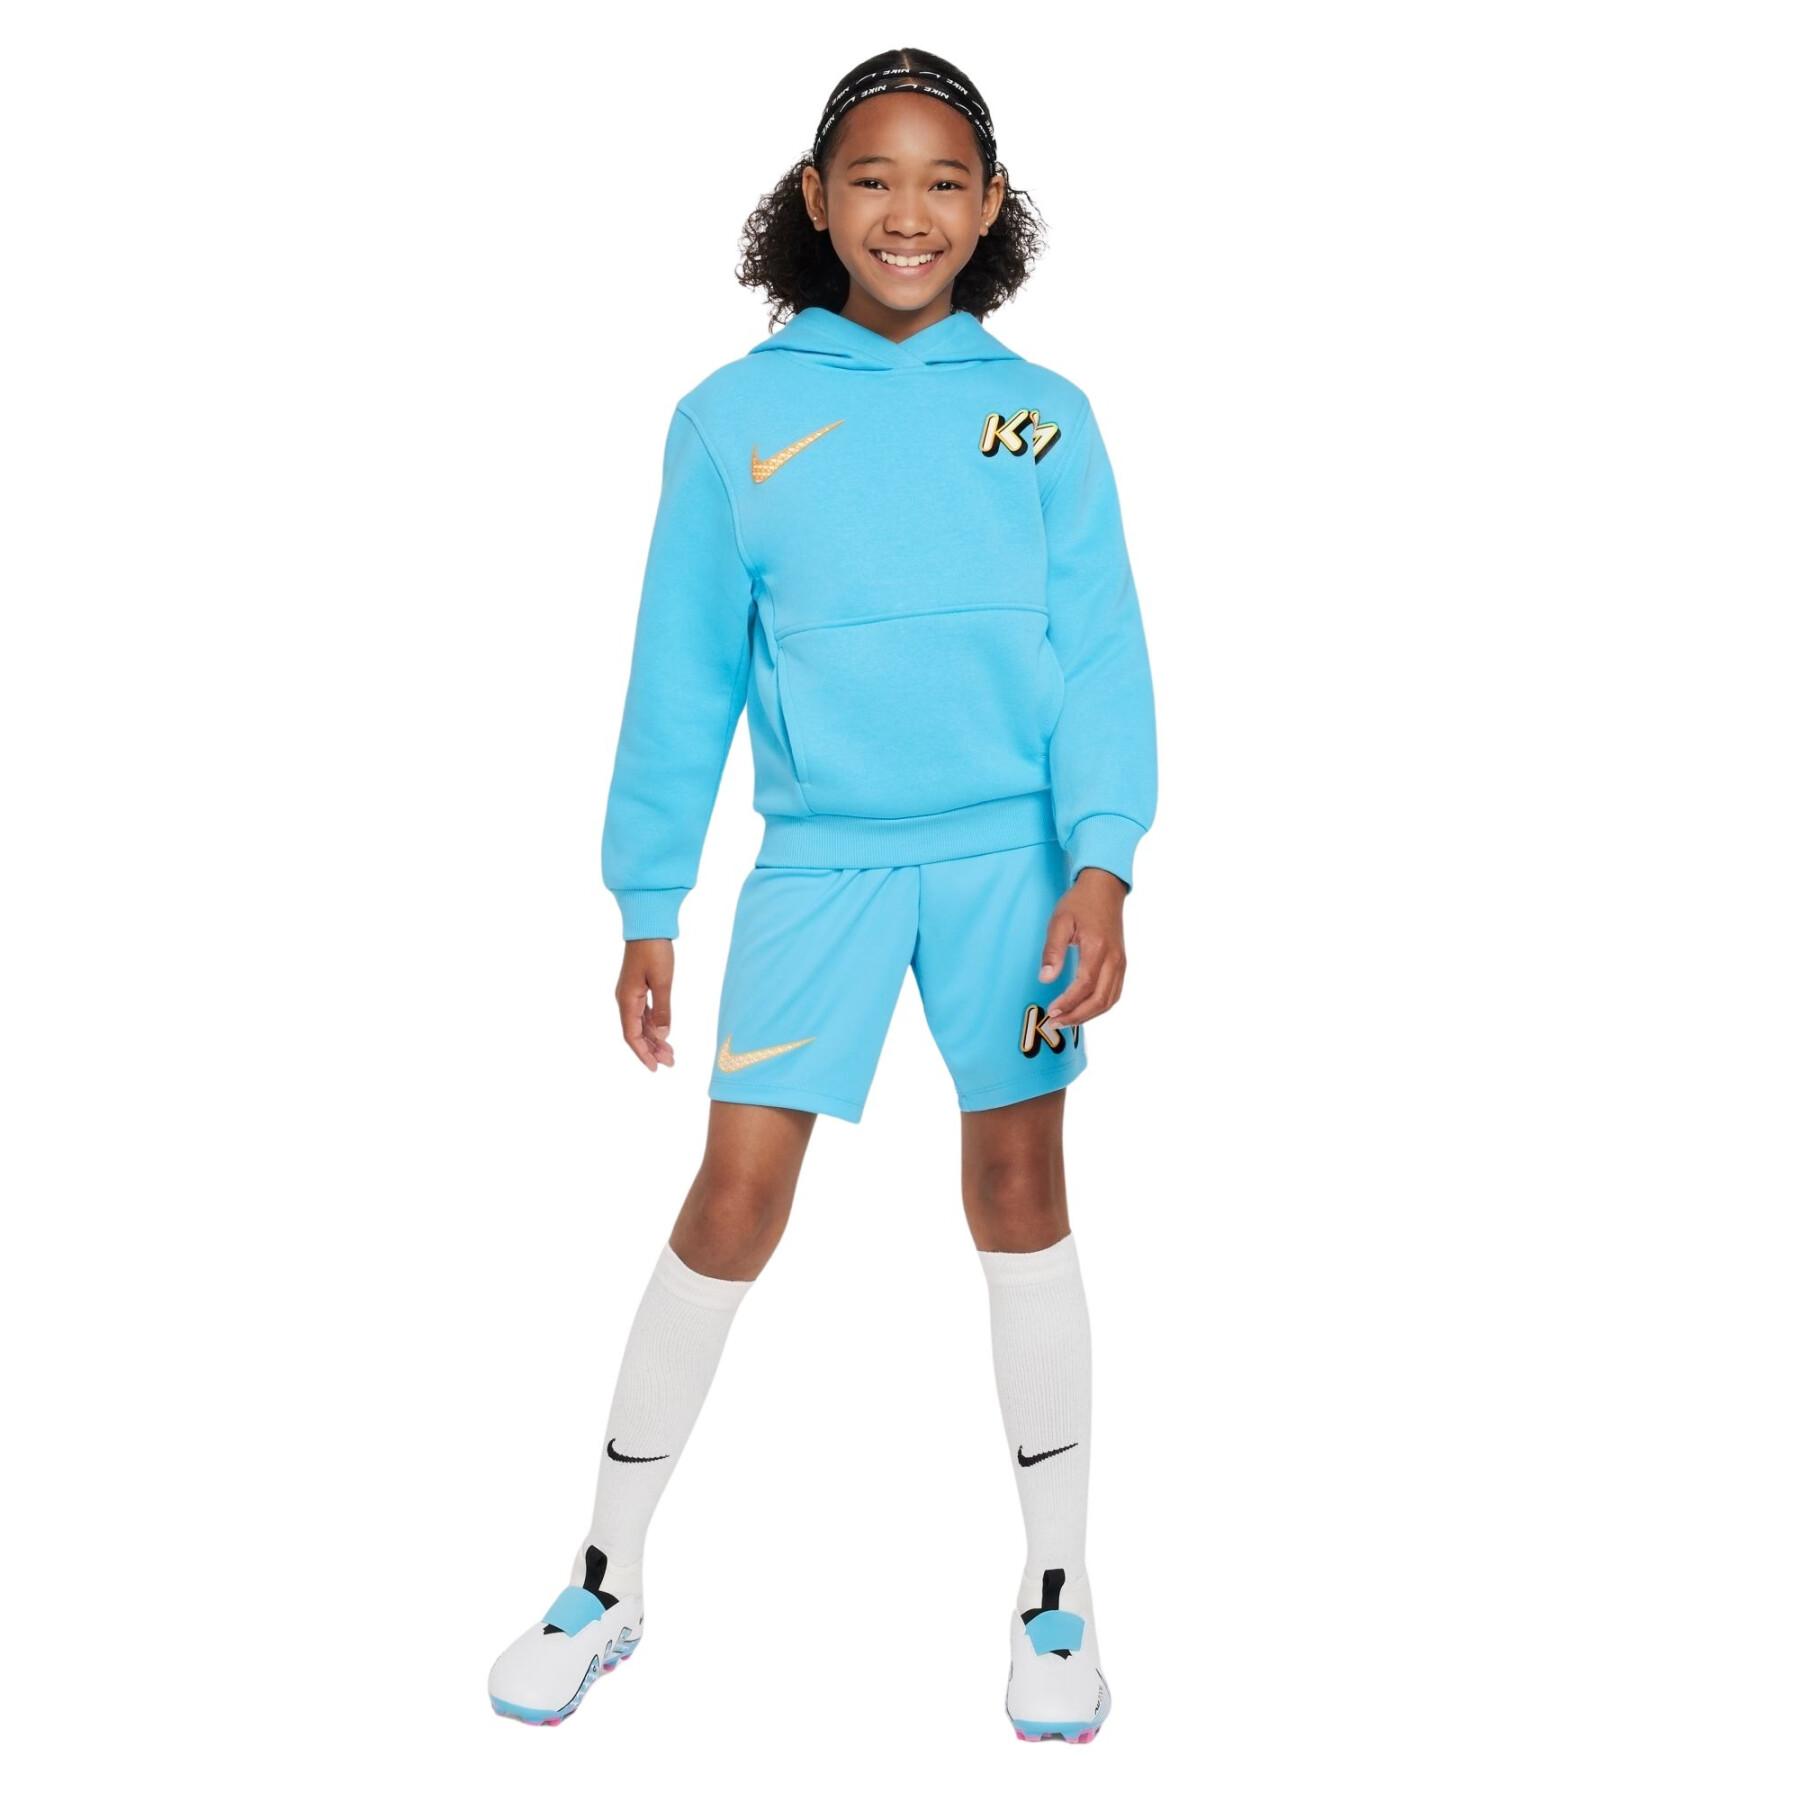 Maillot enfant Nike Kylian Mbappé - Nike - Maillots d'entraînement - Enfants